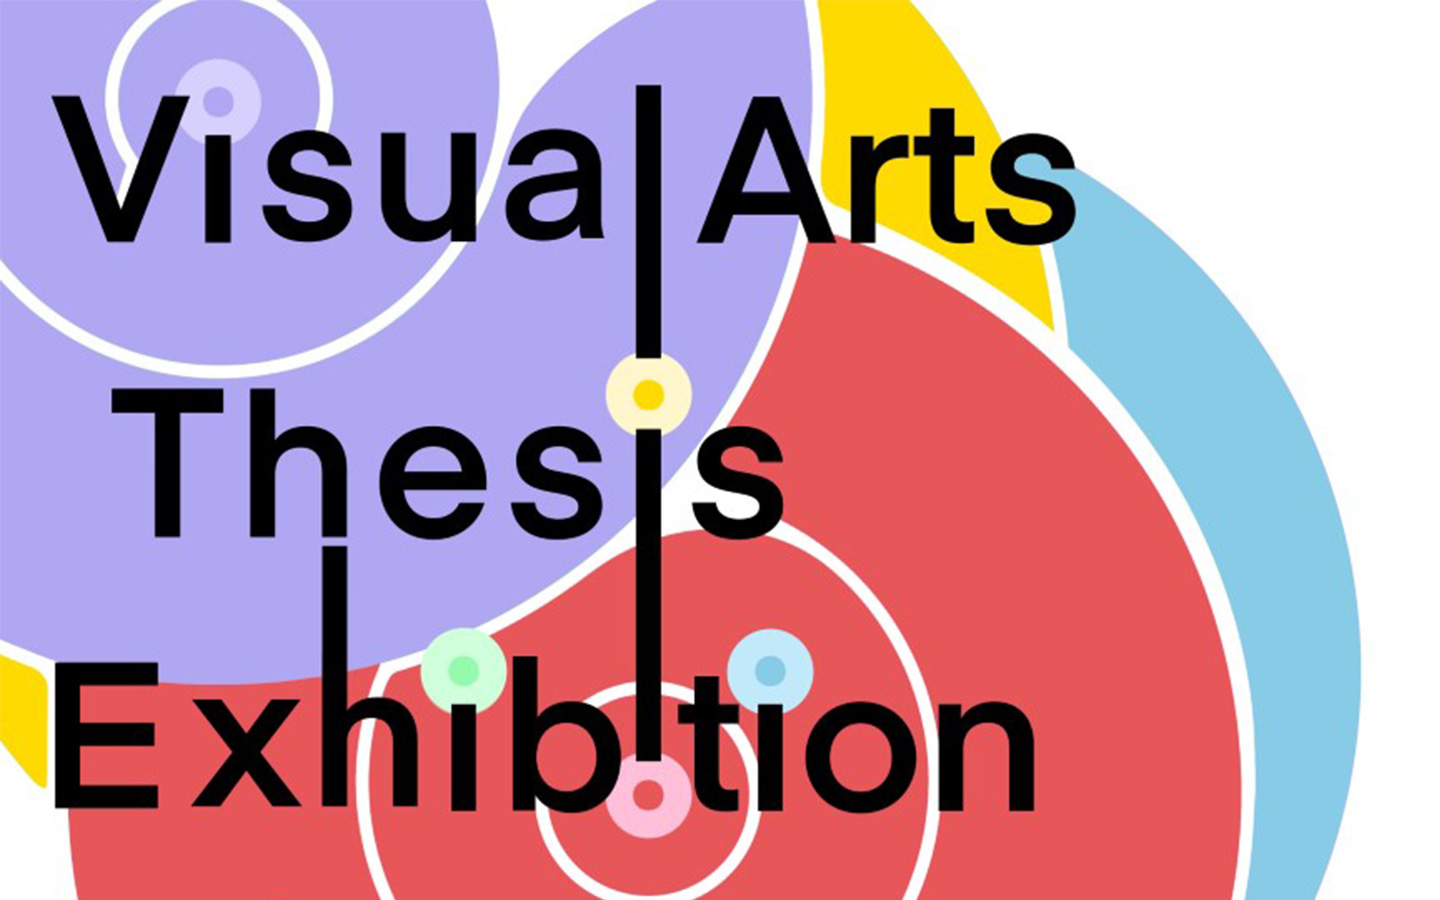 Visual Arts Thesis Exhibition